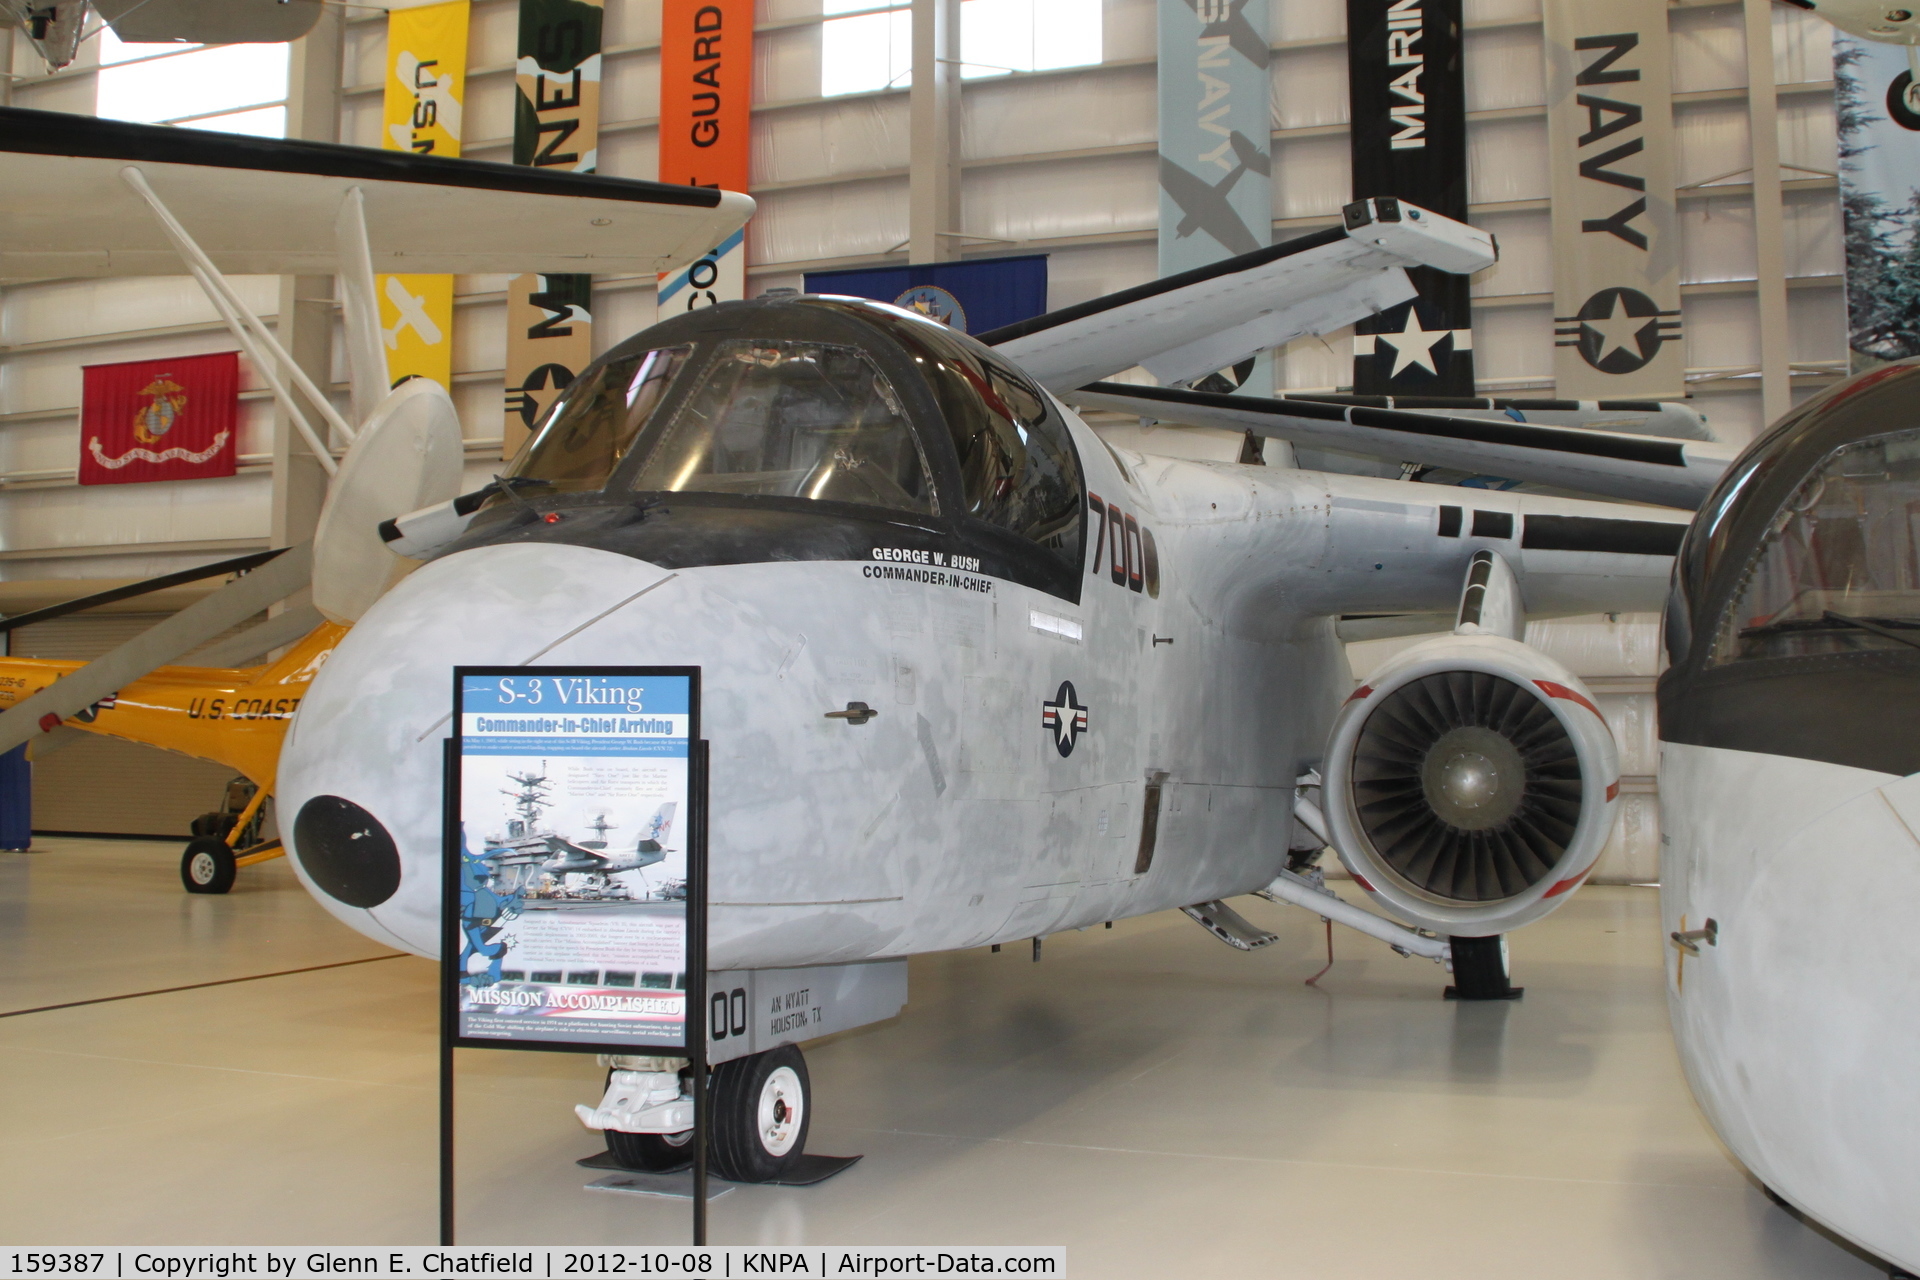 159387, Lockheed S-3B Viking C/N 394A-1023, Naval Aviation Museum